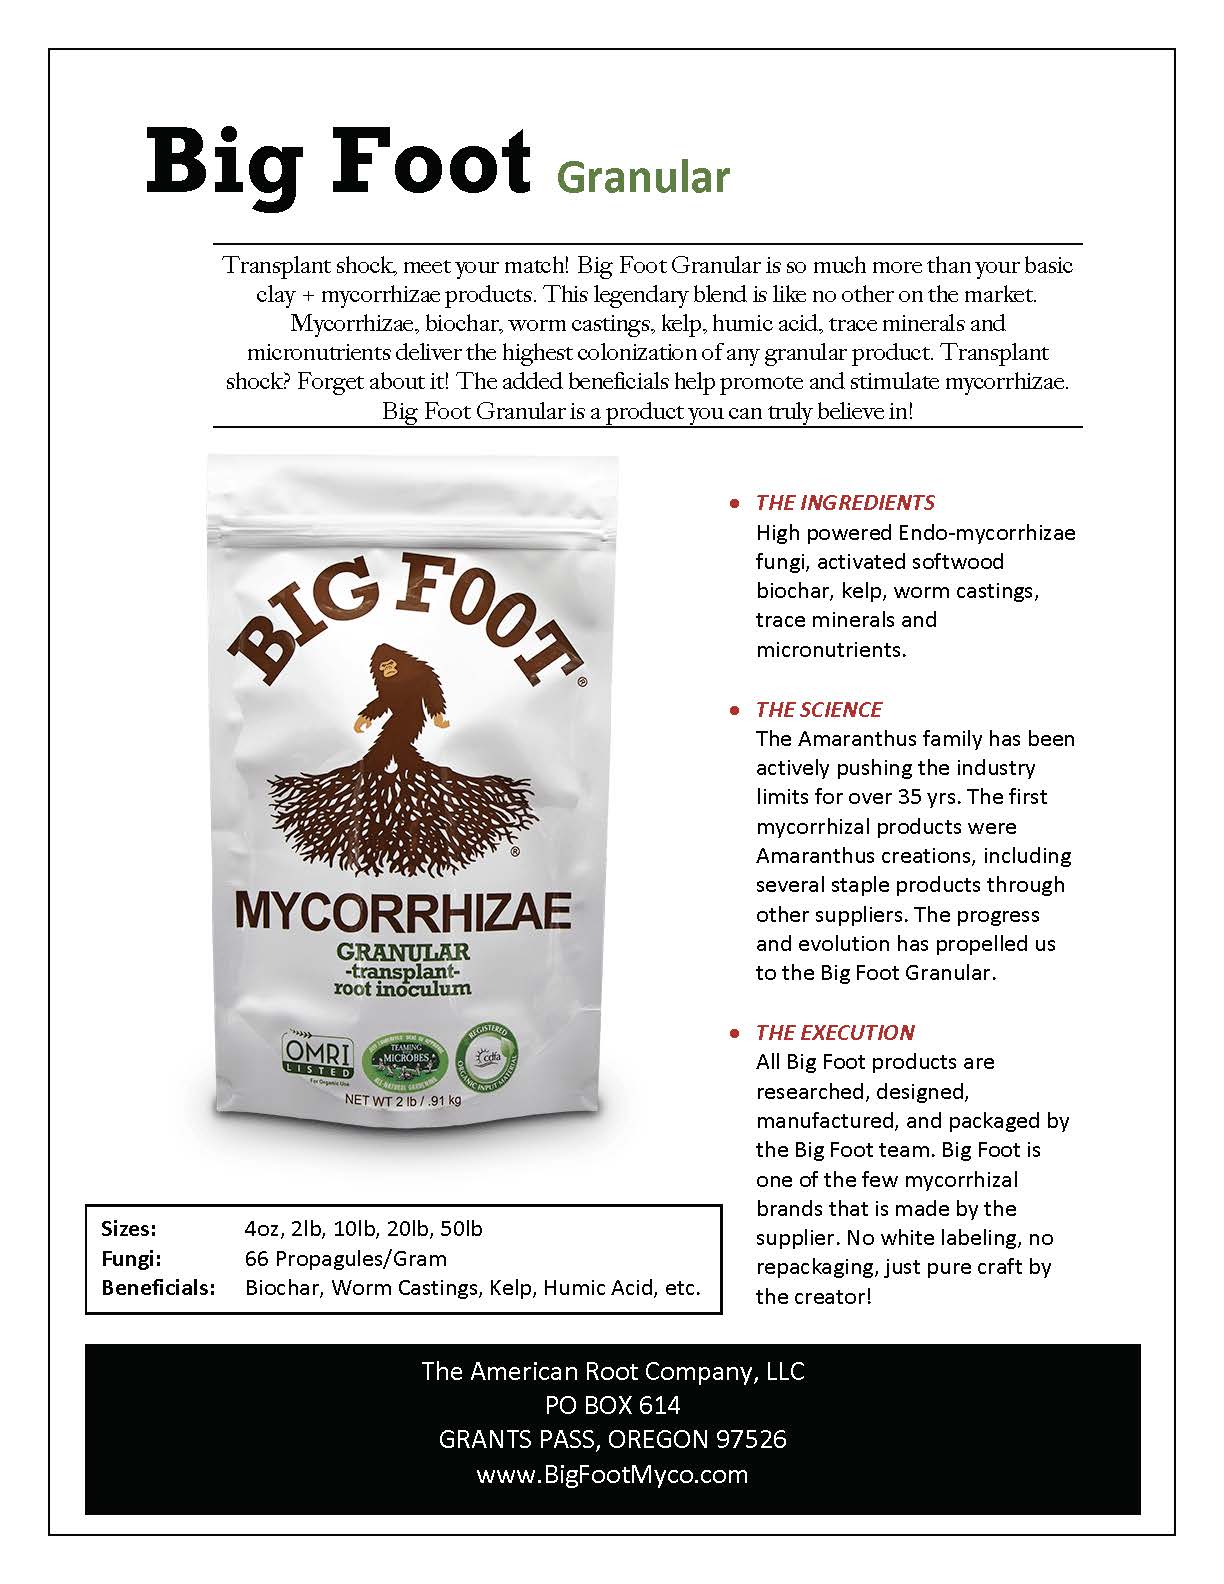 Big Foot Mycorrhizae Granular